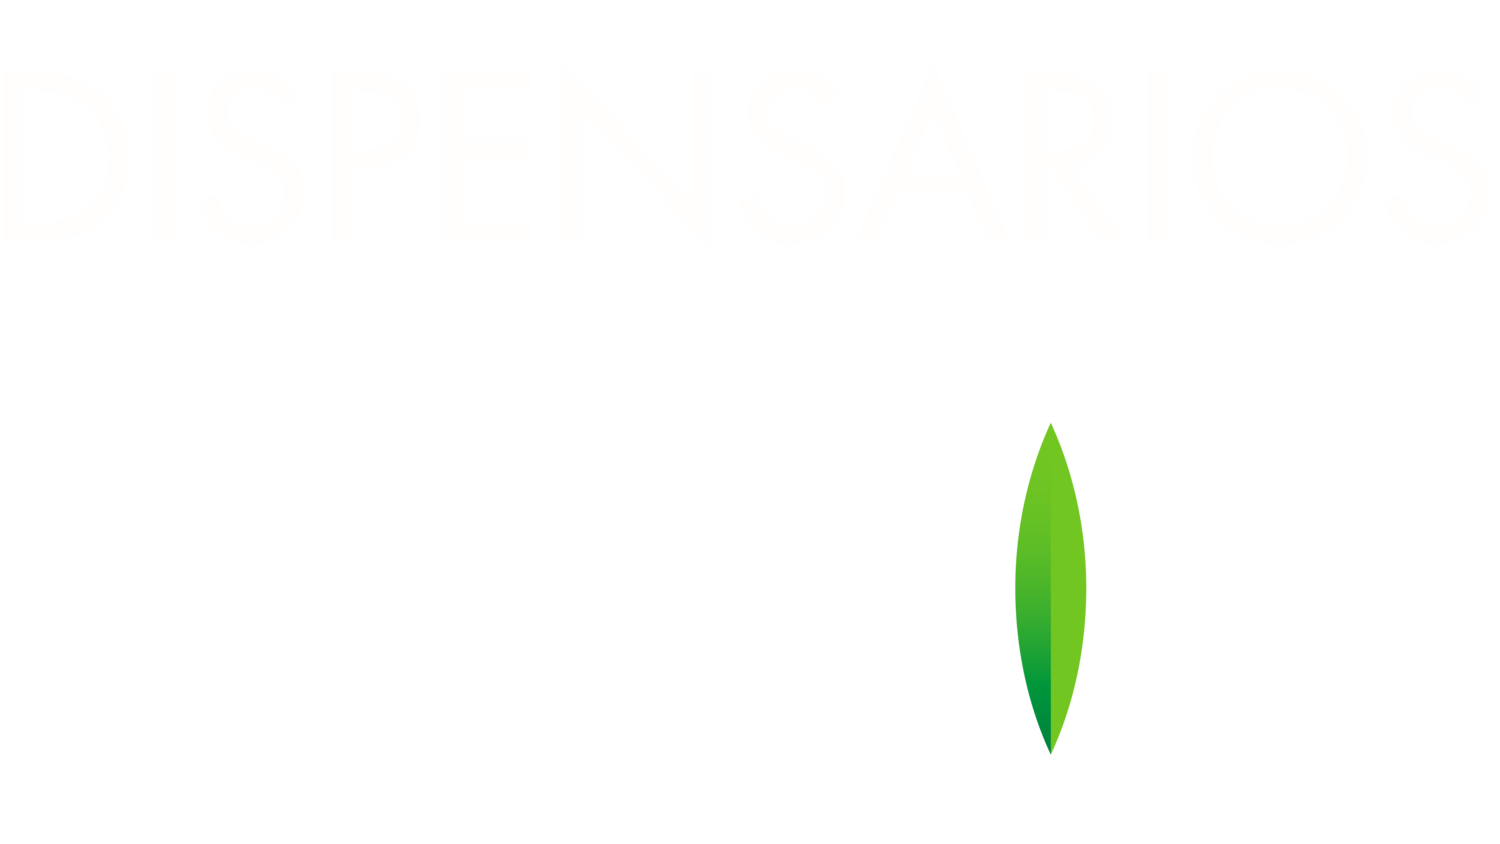 Dispensarios 420